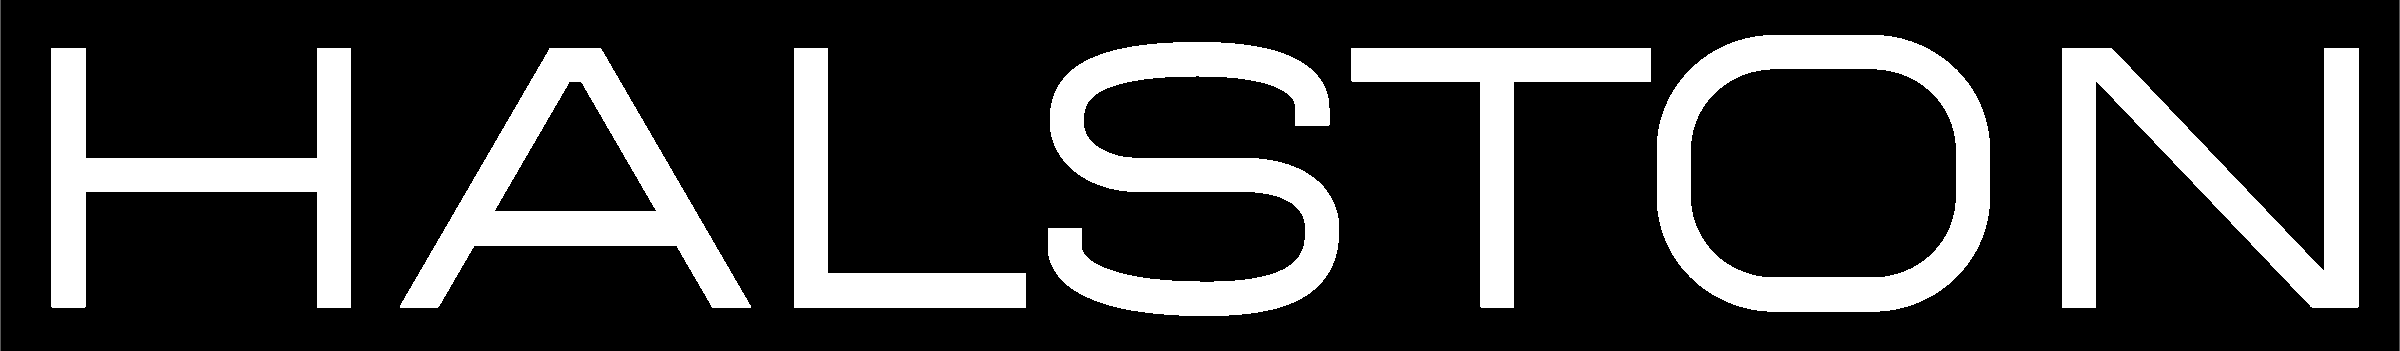 Halston Logo - Halston Logo PNG Transparent & SVG Vector